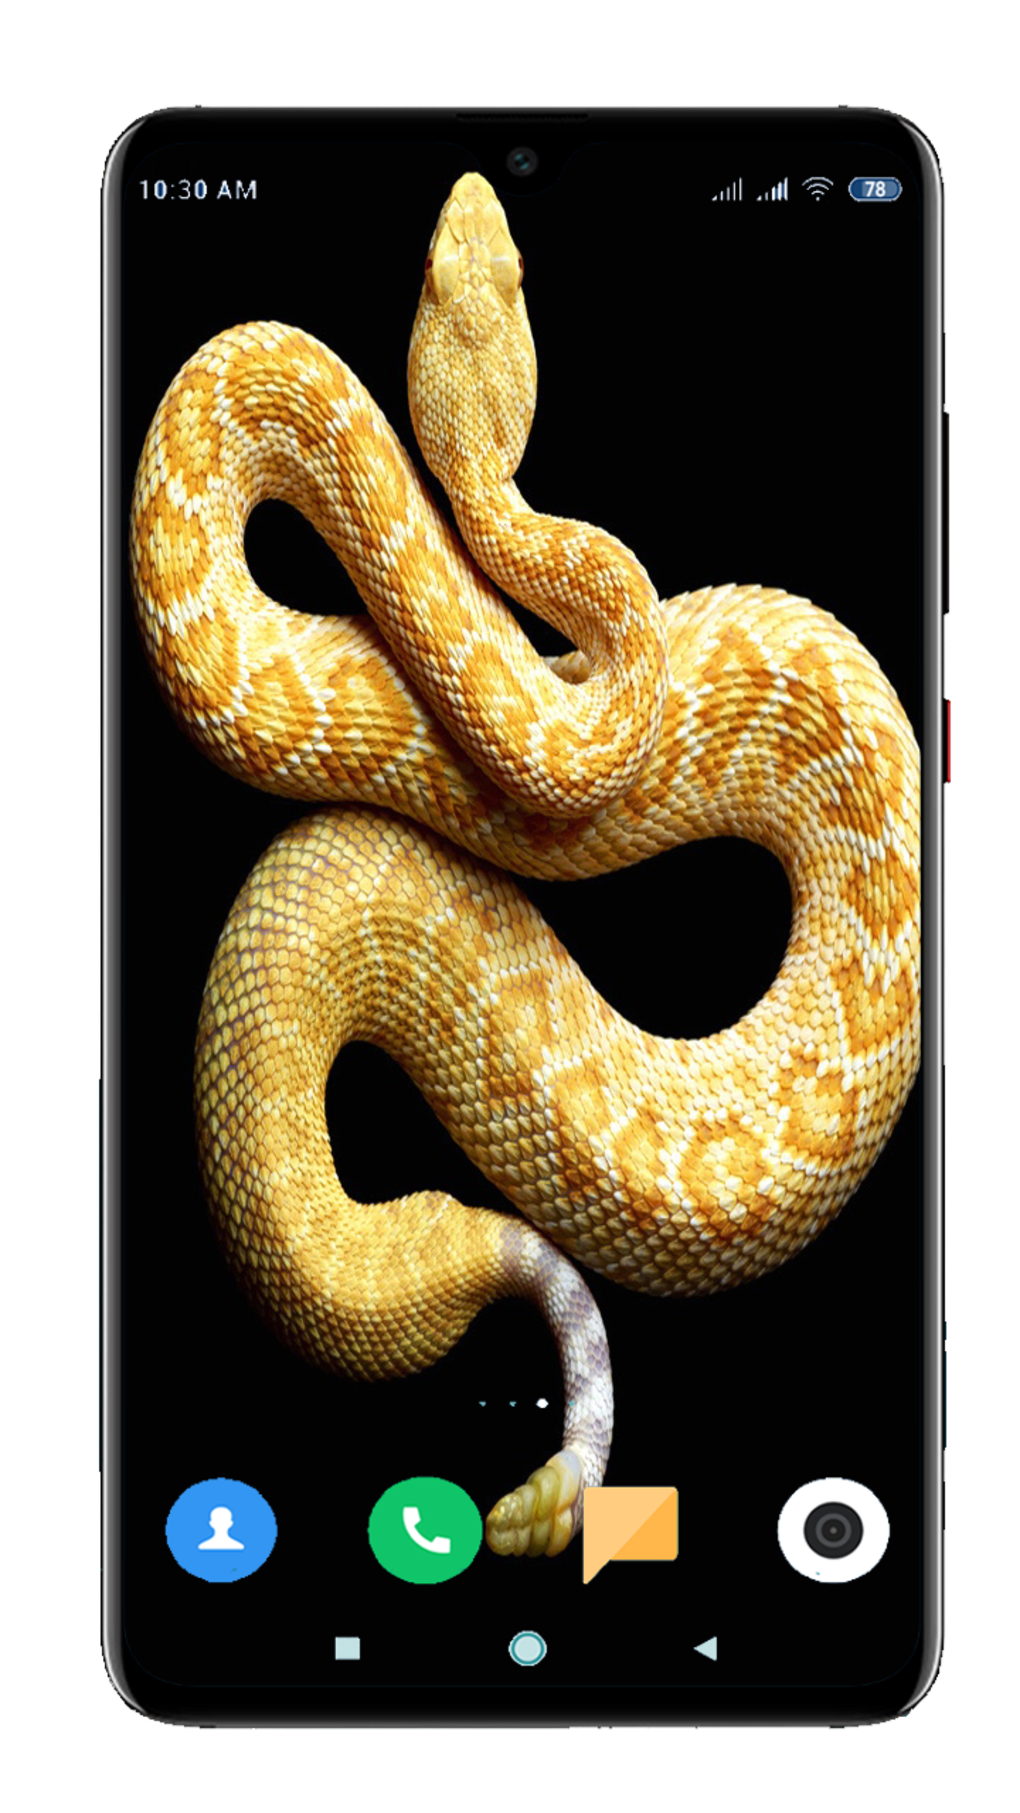 Snake Wallpaper HD APK cho Android - Tải về